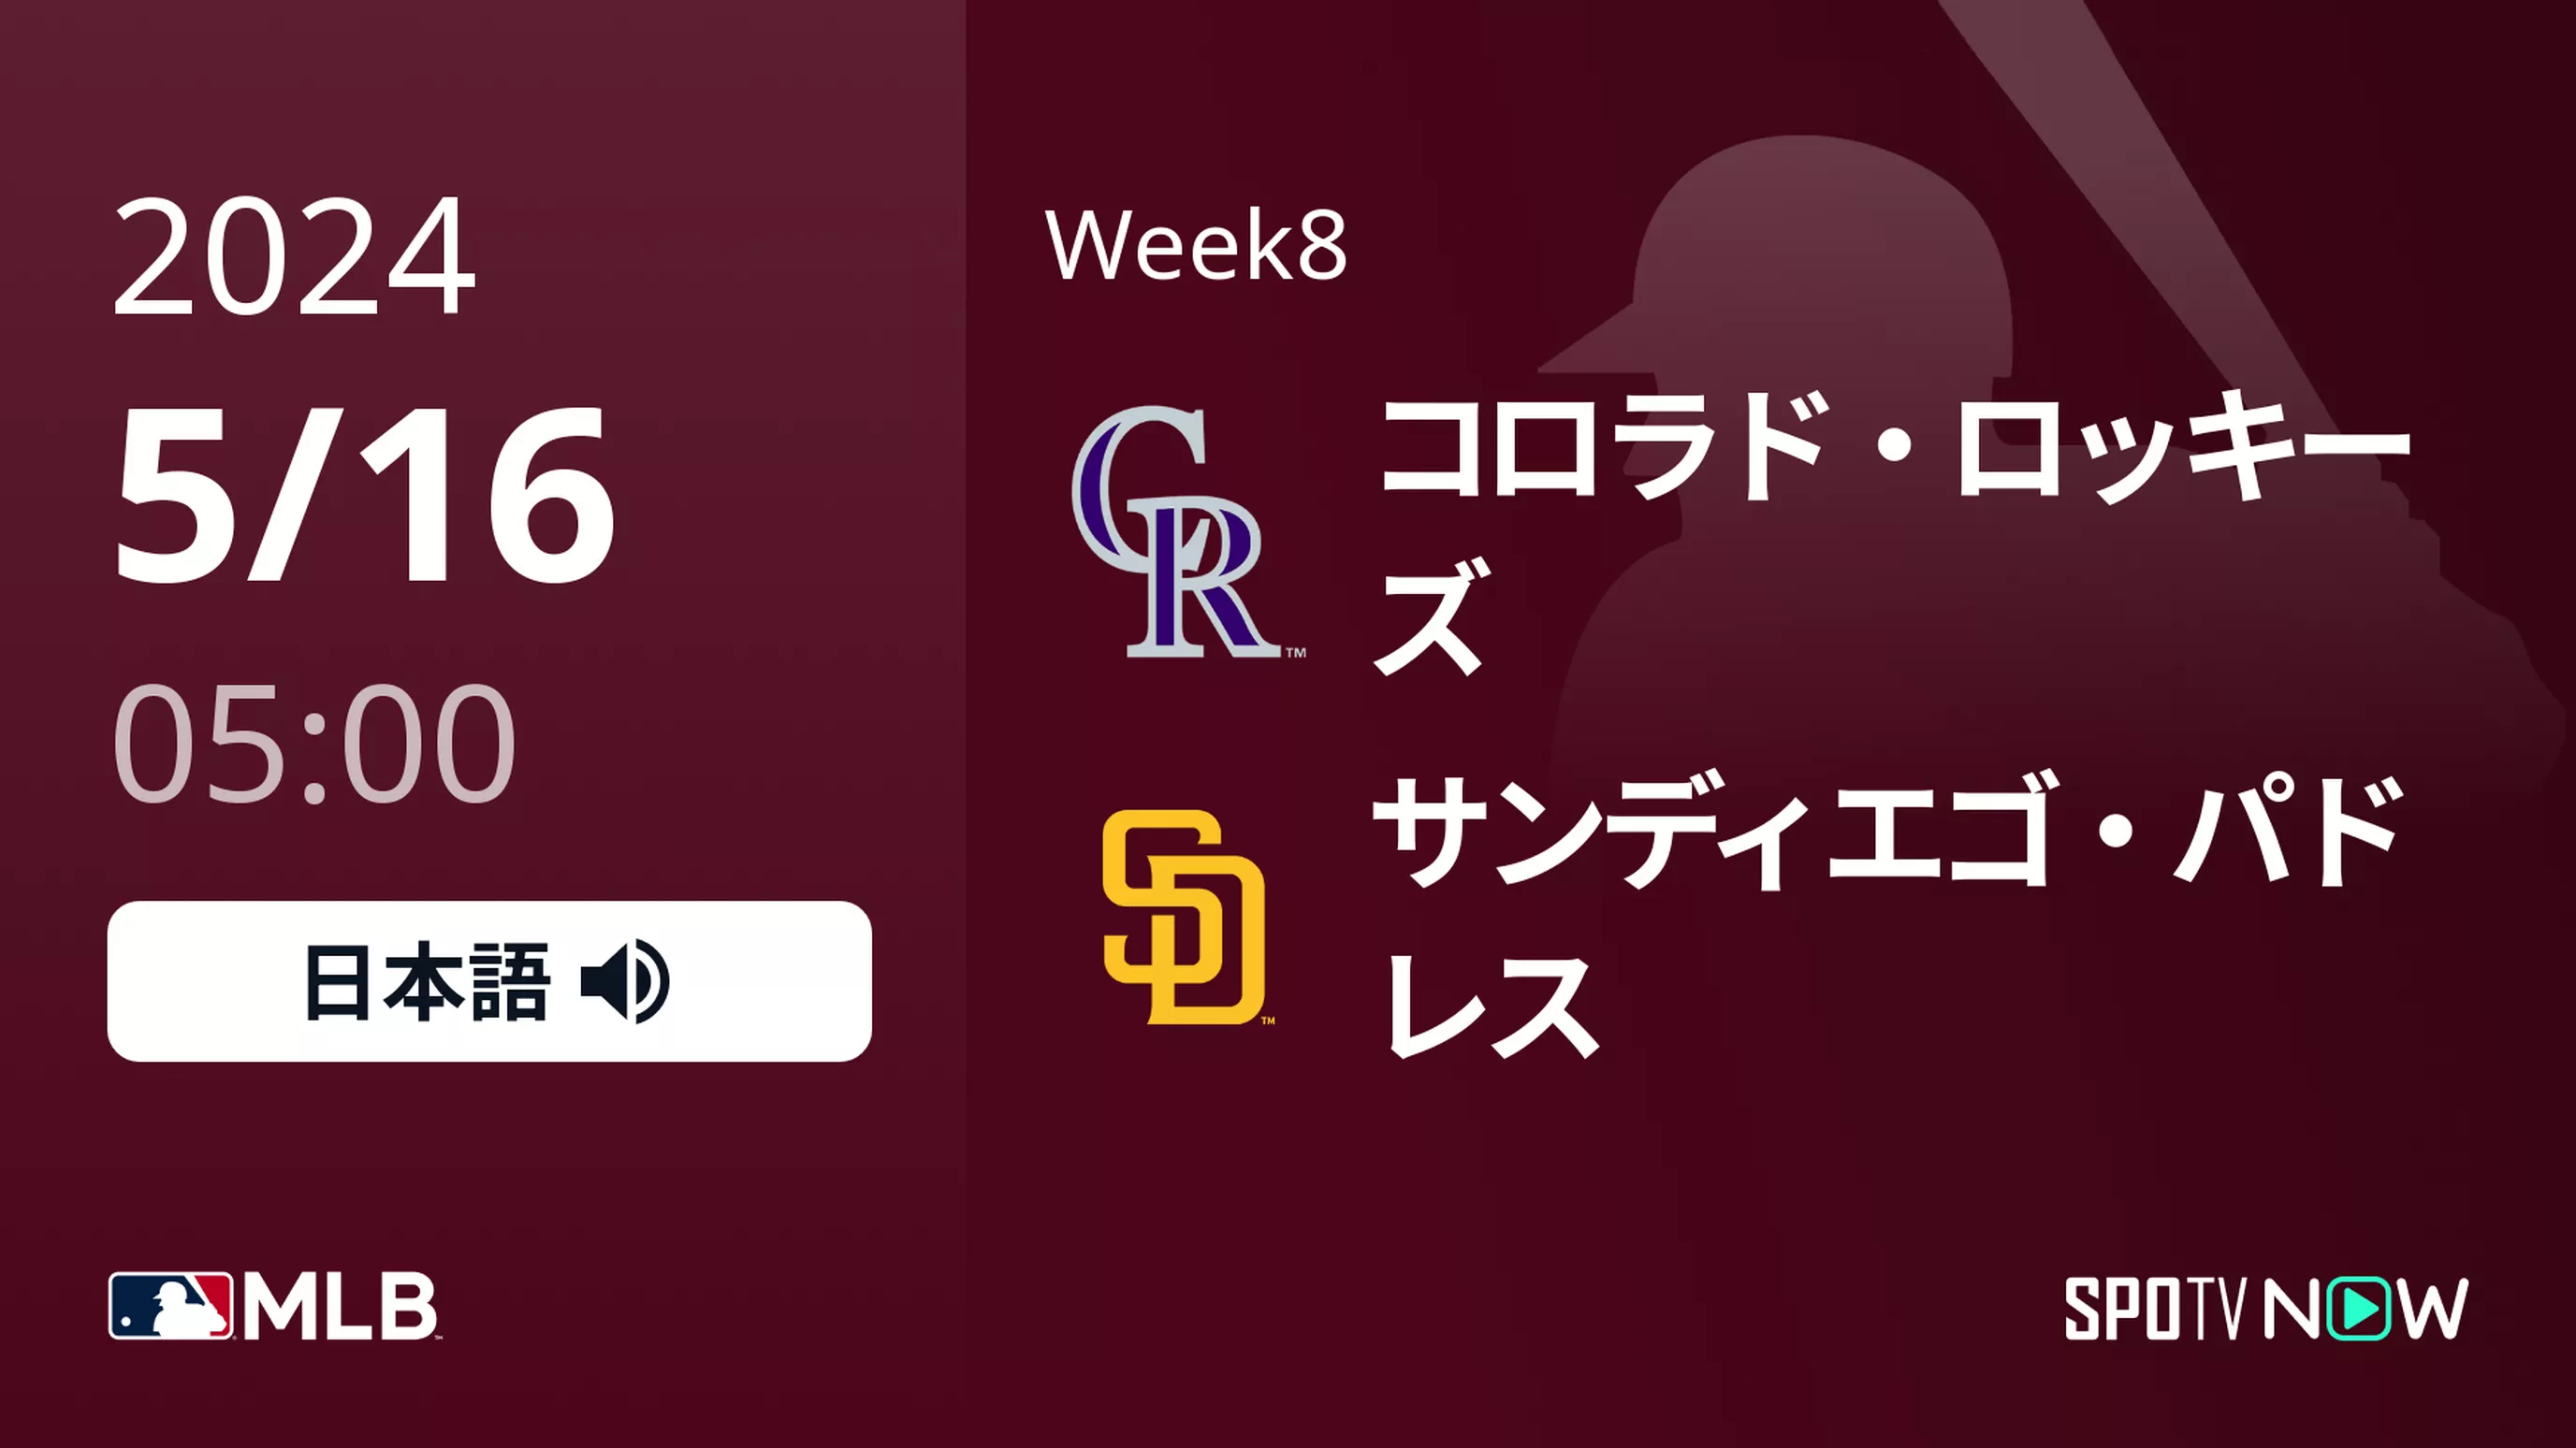 Week8 ロッキーズ vs パドレス 5/16[MLB]